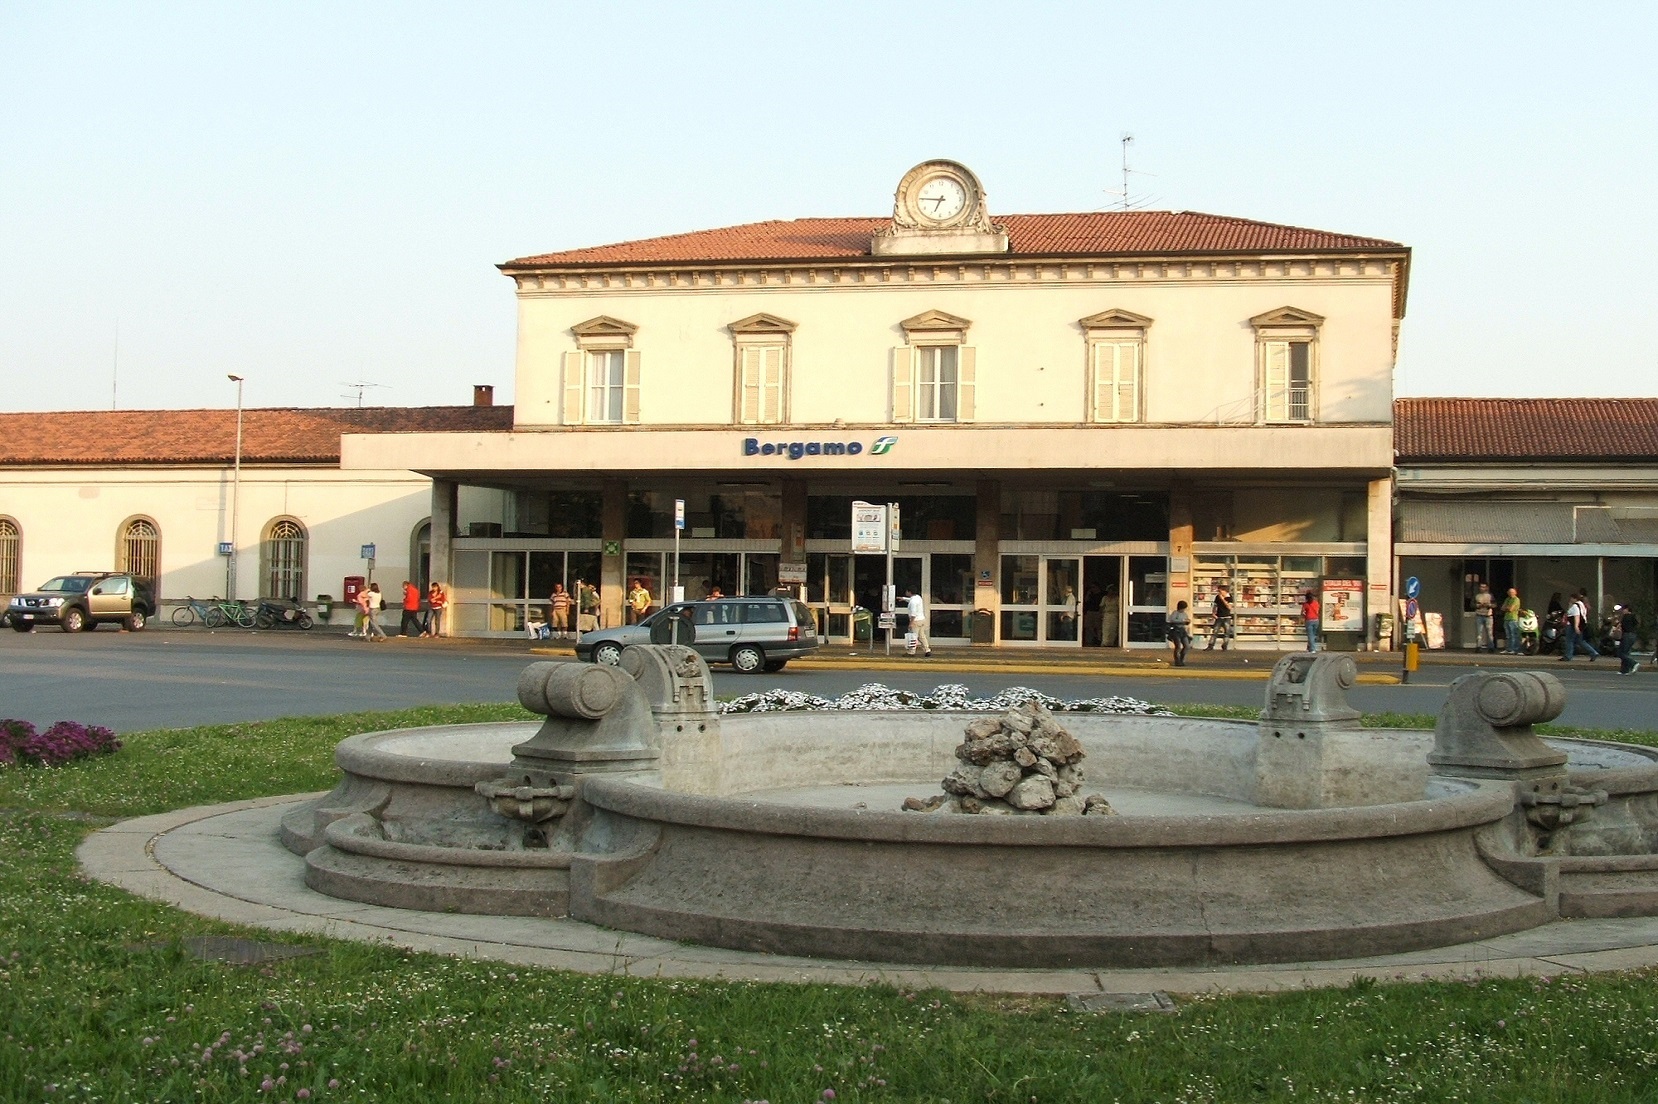 Bergamo station